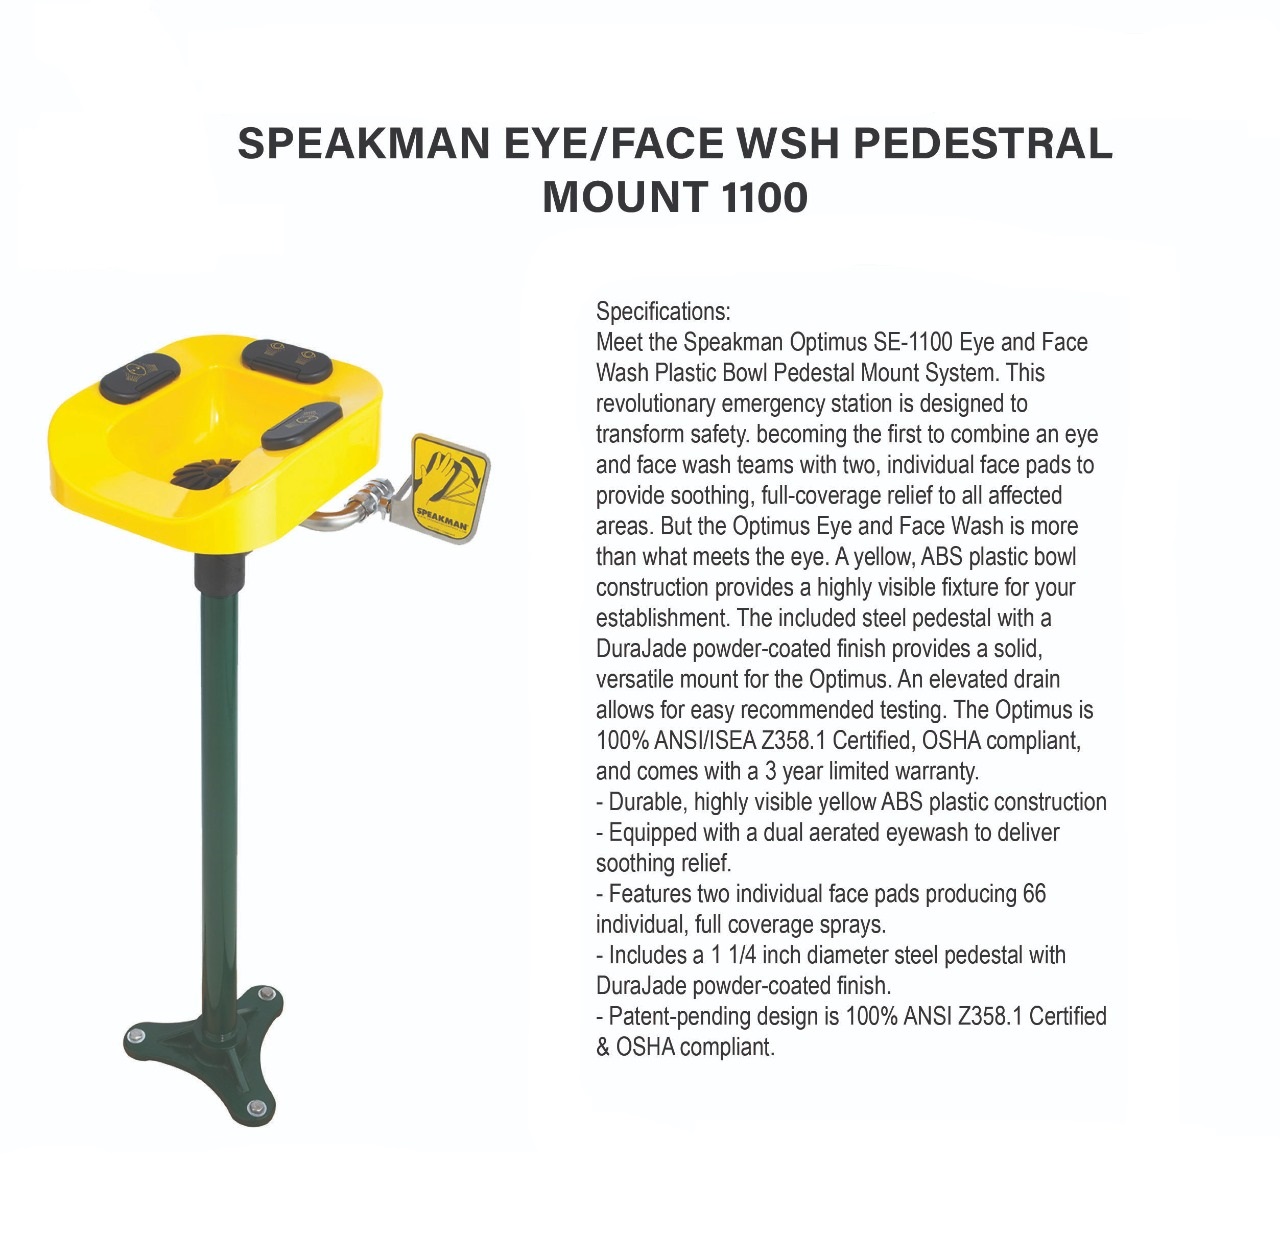 SPEAKMAN EYE/FACE WASH PEDESTAL MOUNT SE-1100